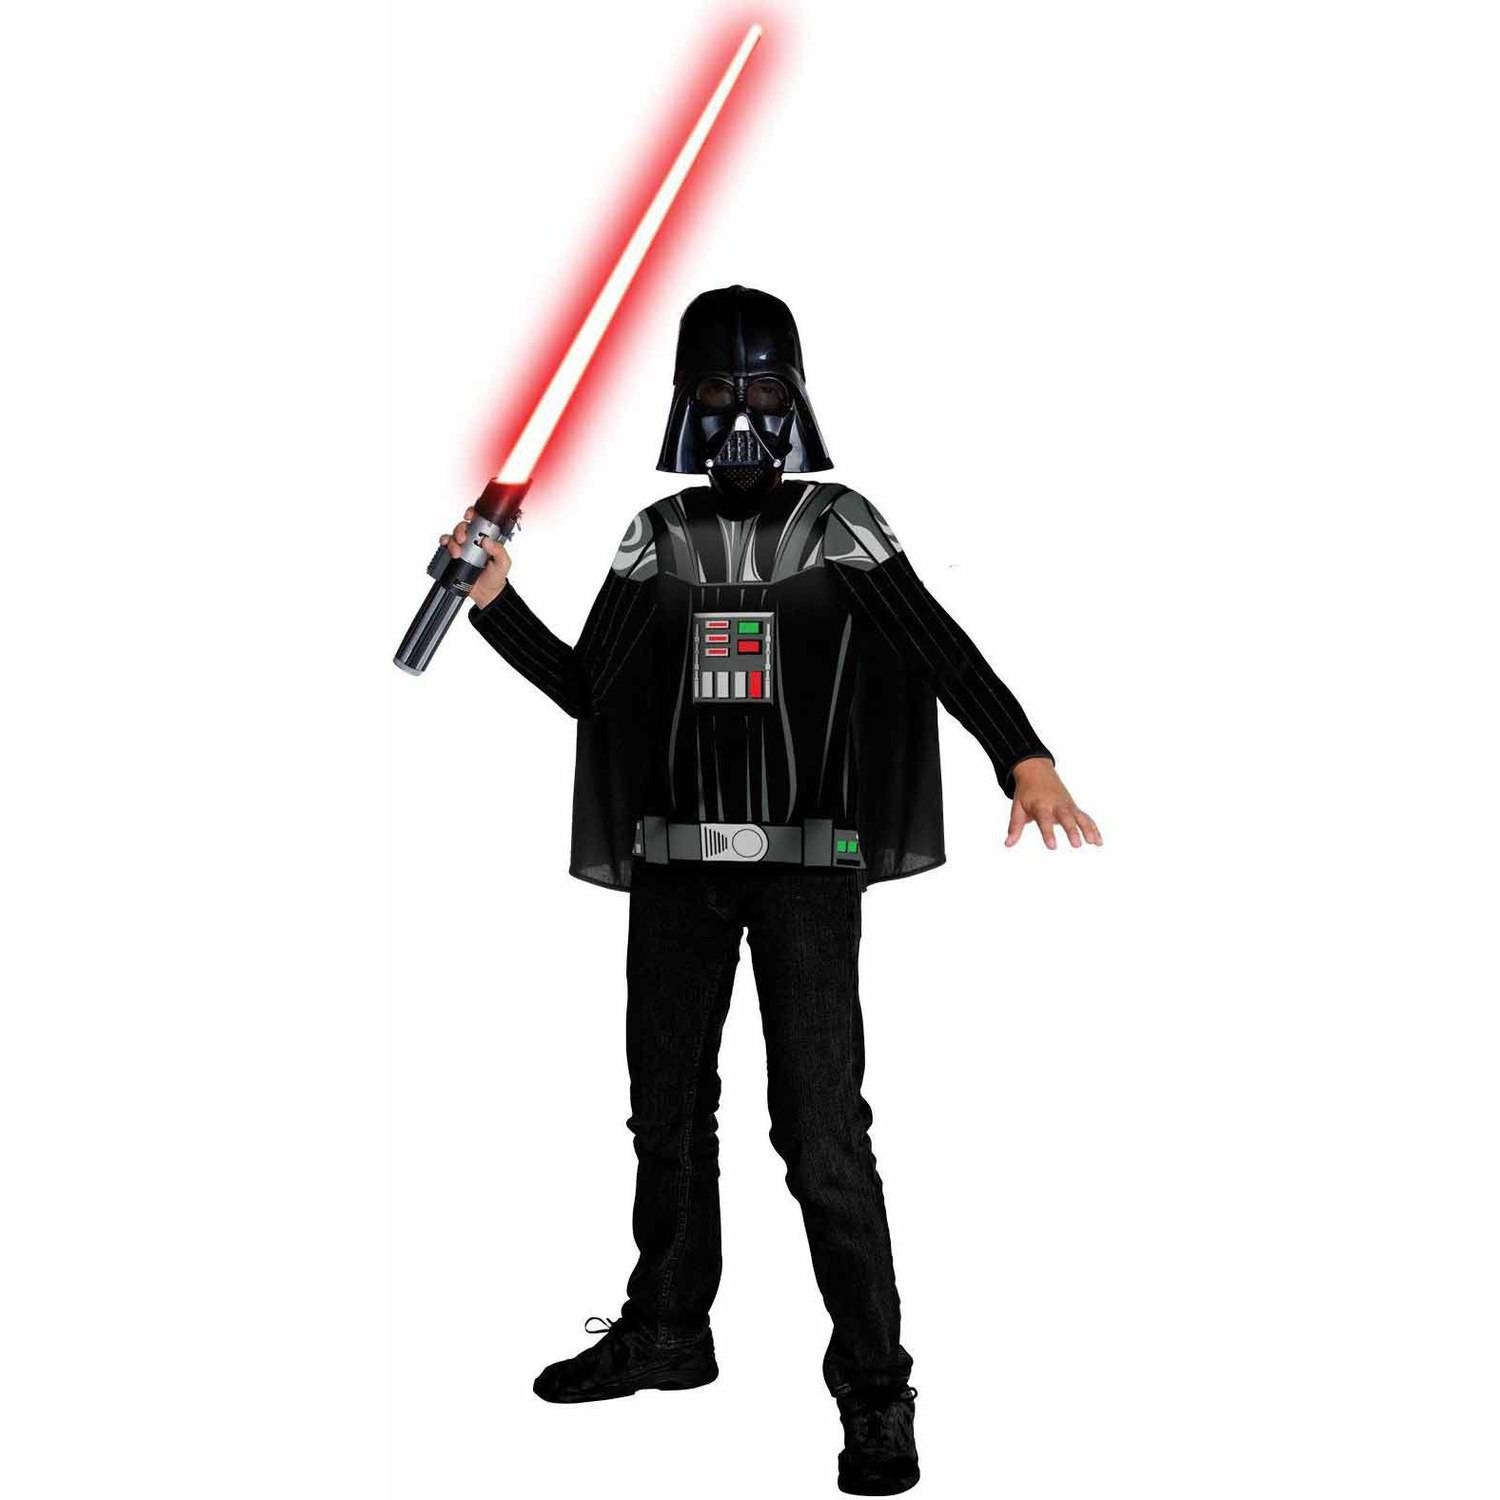 Star Wars Darth Vader Boy's Halloween Fancy-Dress Costume for Child, M (8-10) - image 1 of 2